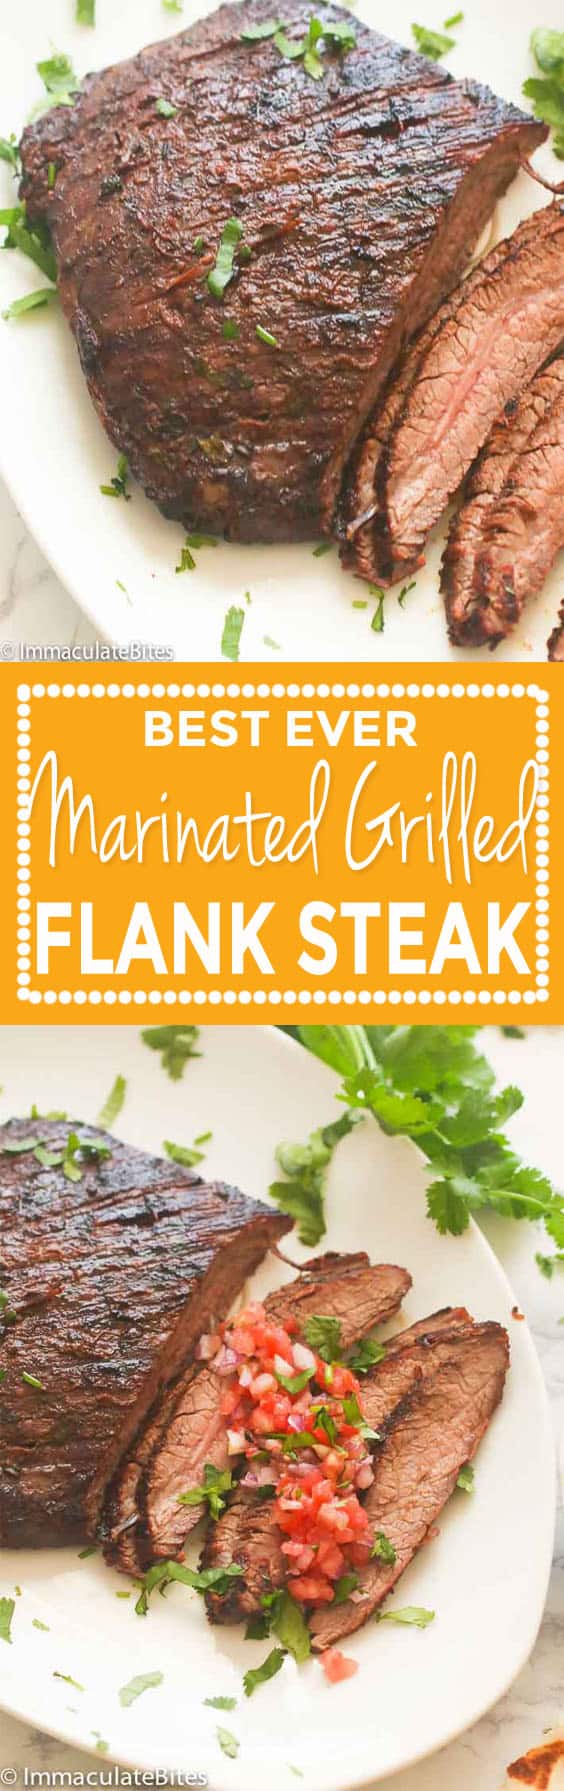 Marinated Grilled Flank Steak